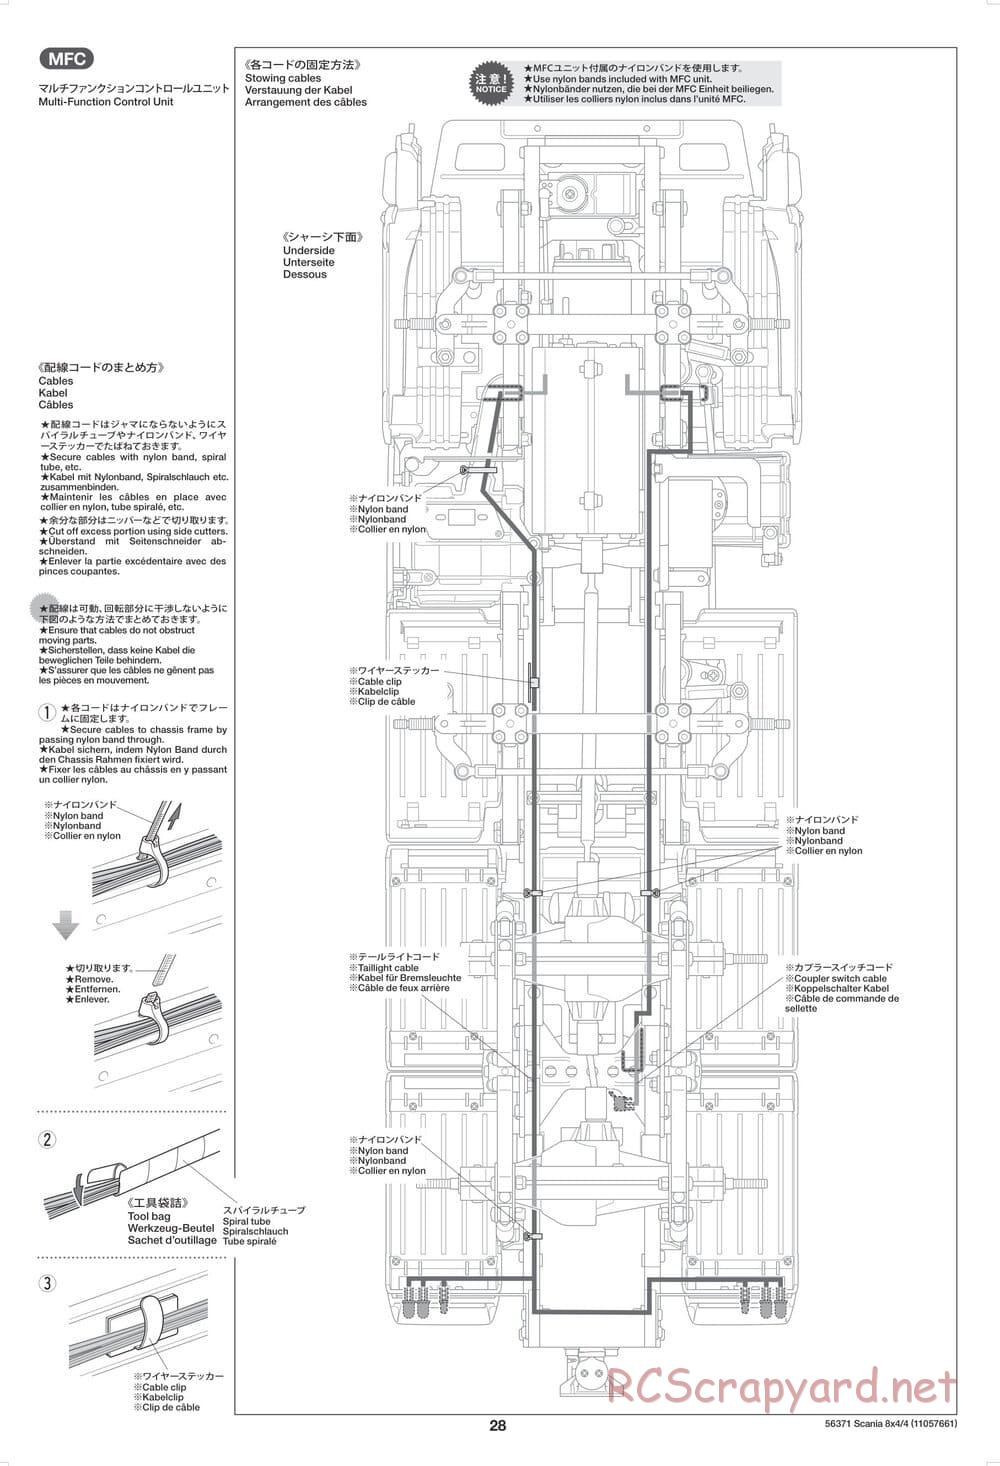 Tamiya - Scania 770 S 8x4/4 Chassis - Manual - Page 28